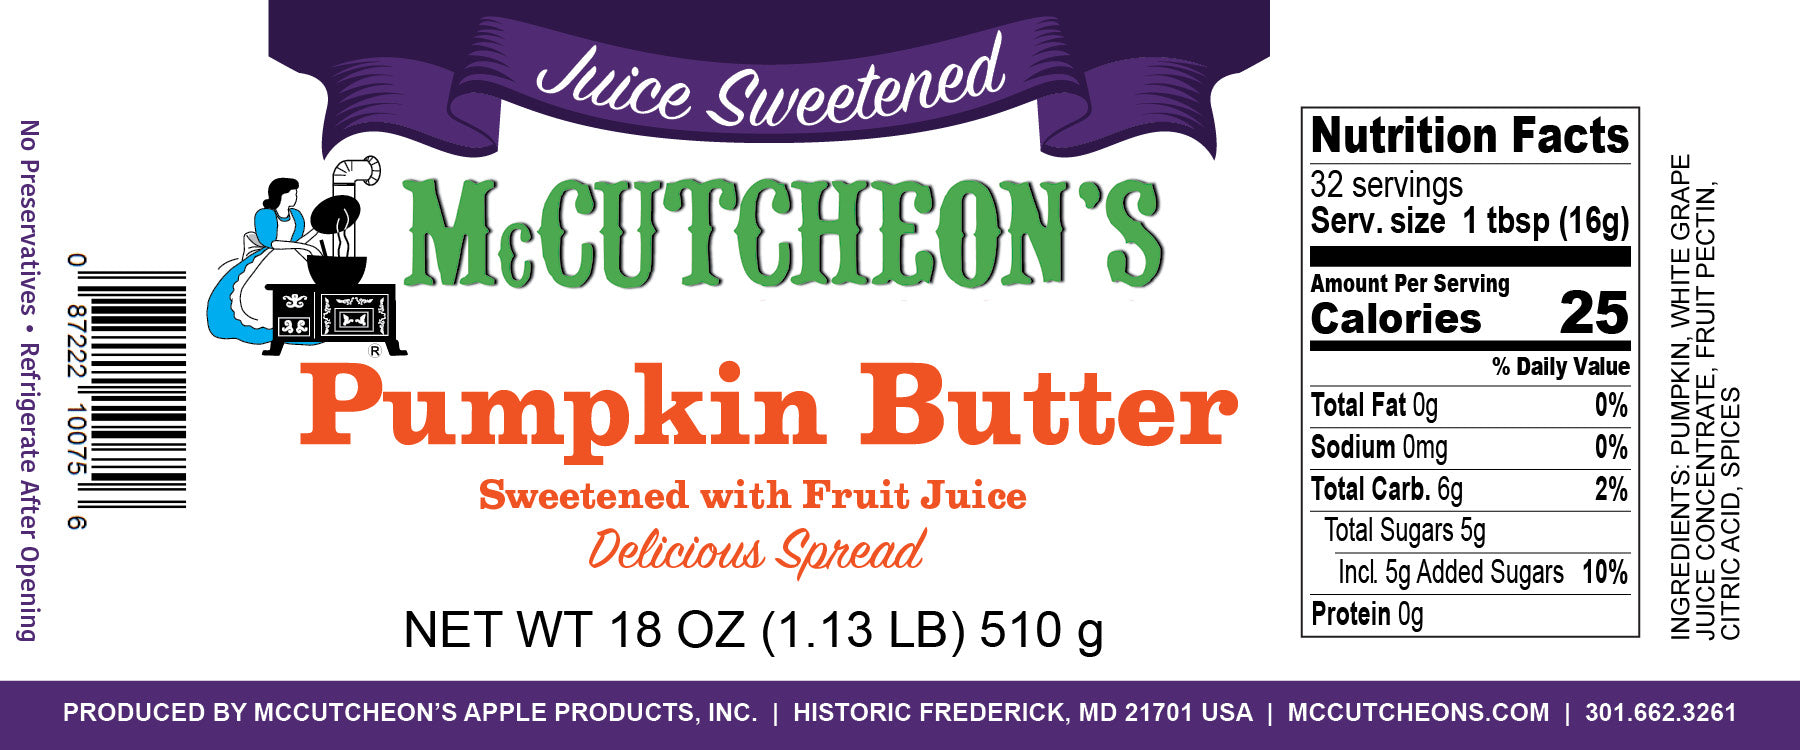 nutrition label of McCutcheon's juice sweetened pumpkin butter